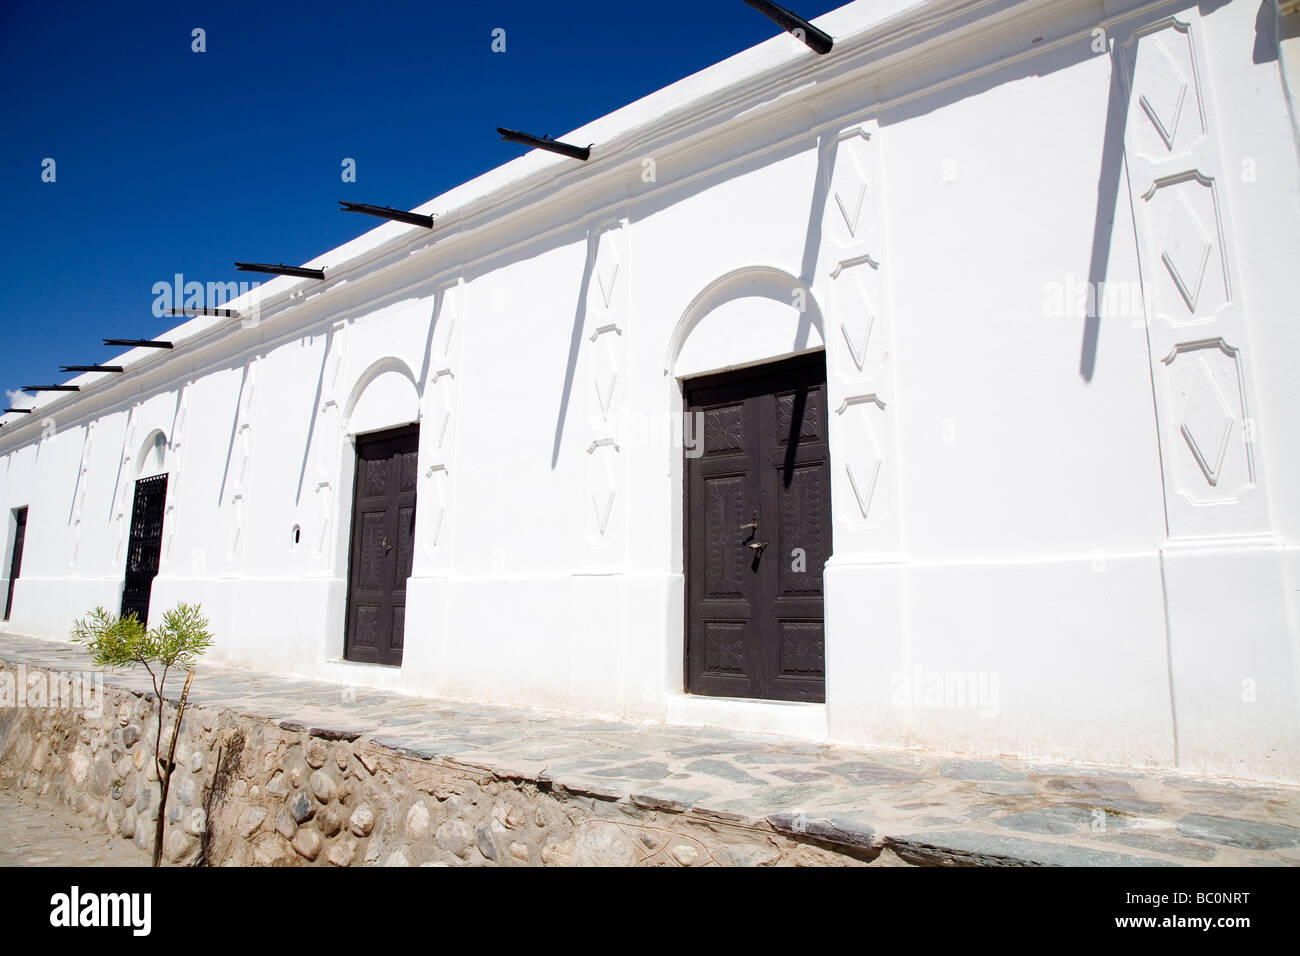 Traditional Hispanic architecture in Cachi, Argentina Stock Photo